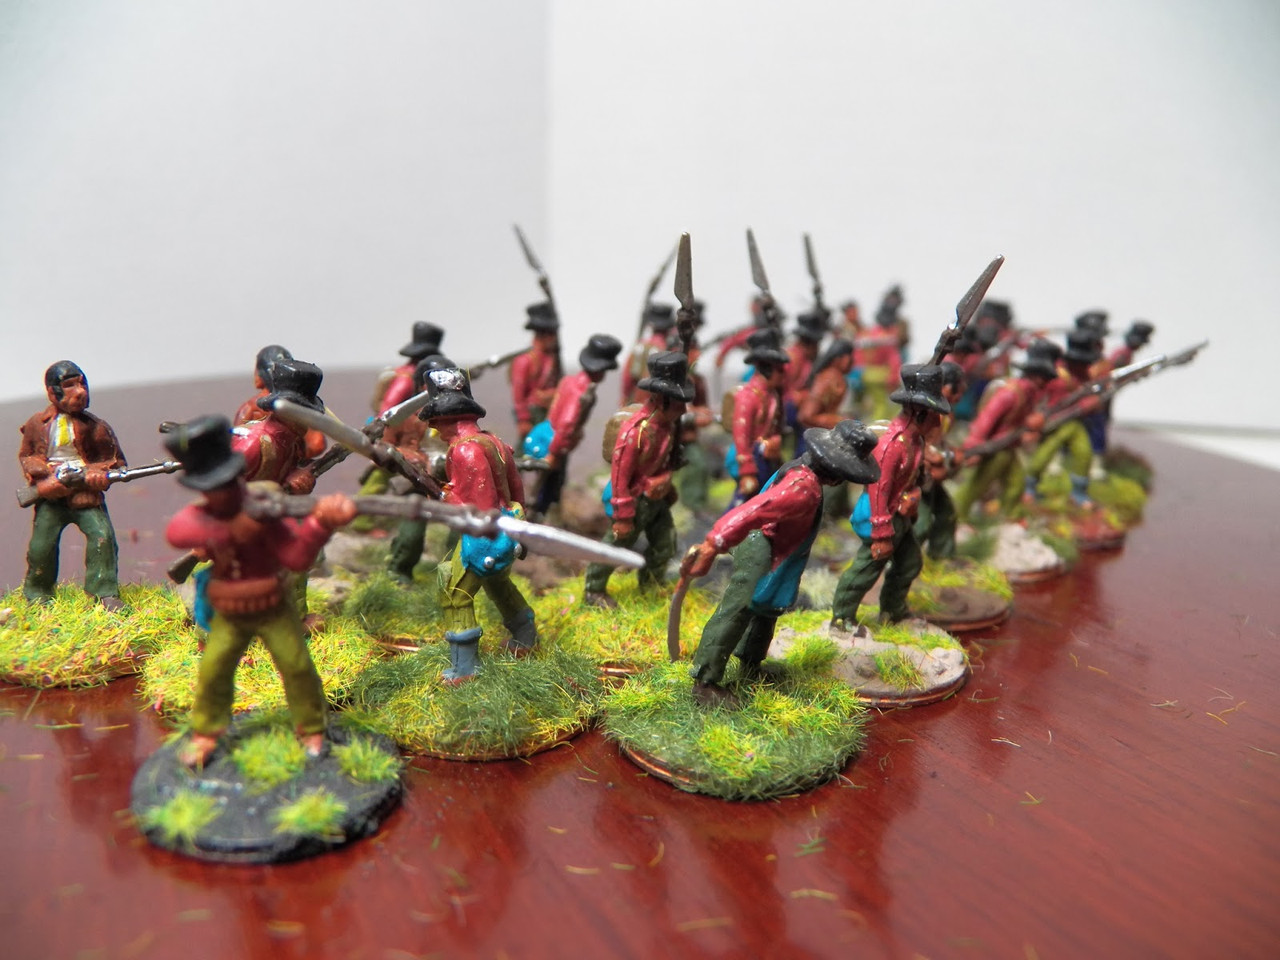 HaT 8116 Napoleonic Spanish Guerillas 1:72 Scale Figures